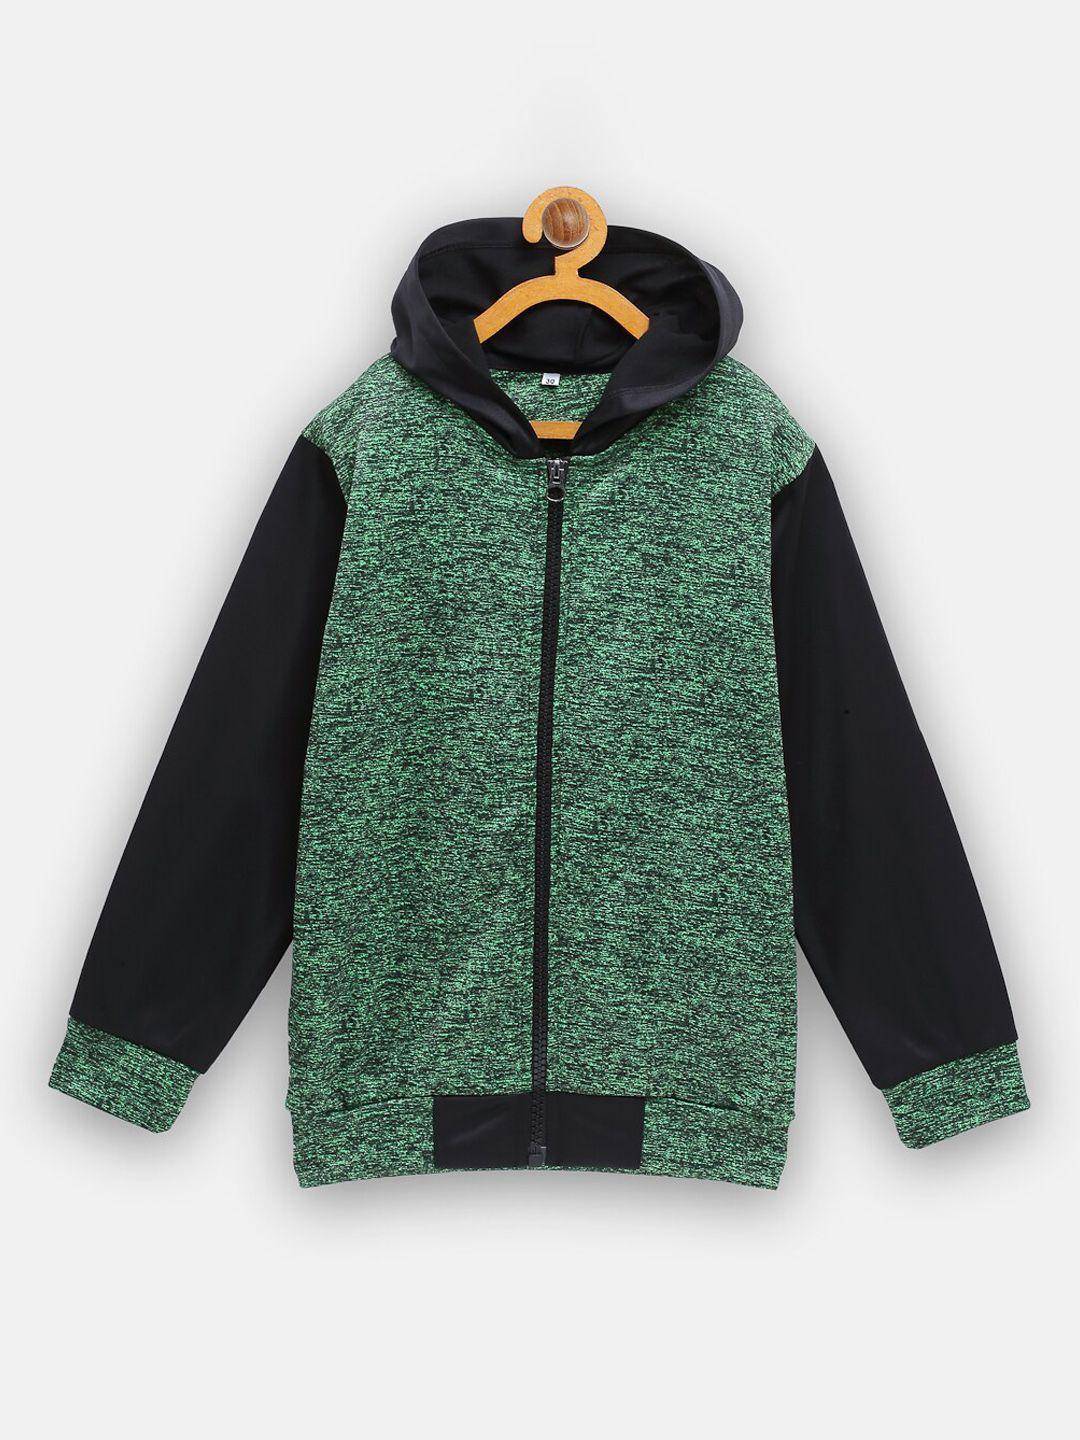 cukoo unisex kids black & green colourblocked hooded sweatshirt